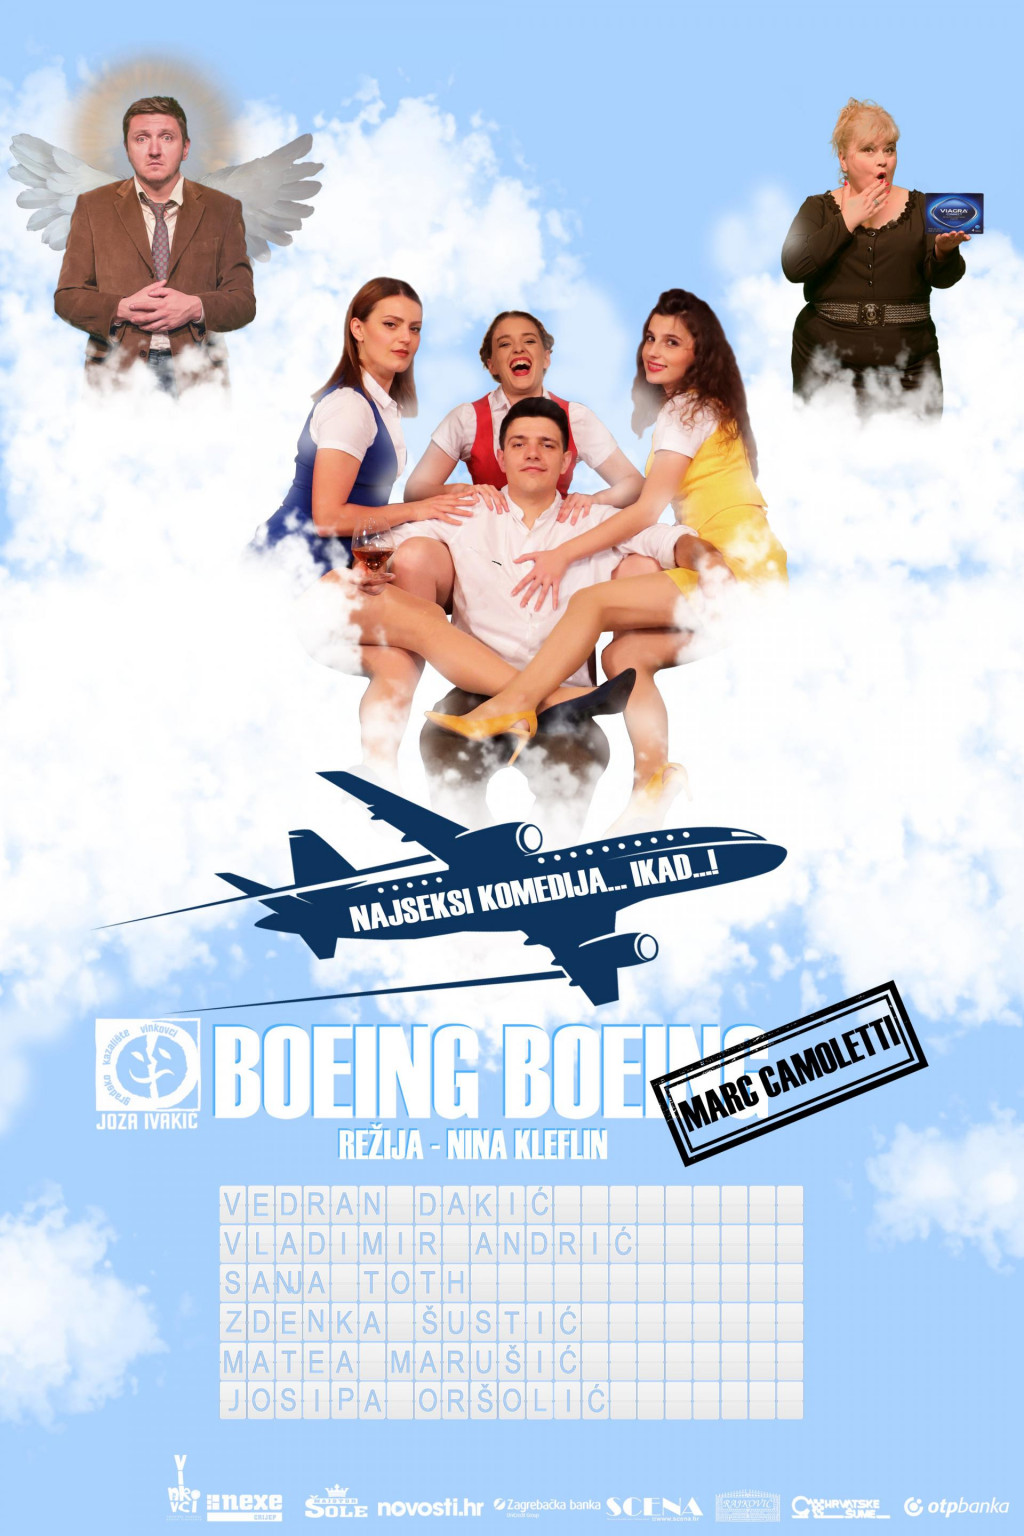 You are currently viewing Komedija “Boeing Boeing” Gradskog kazališta Joza Ivakić